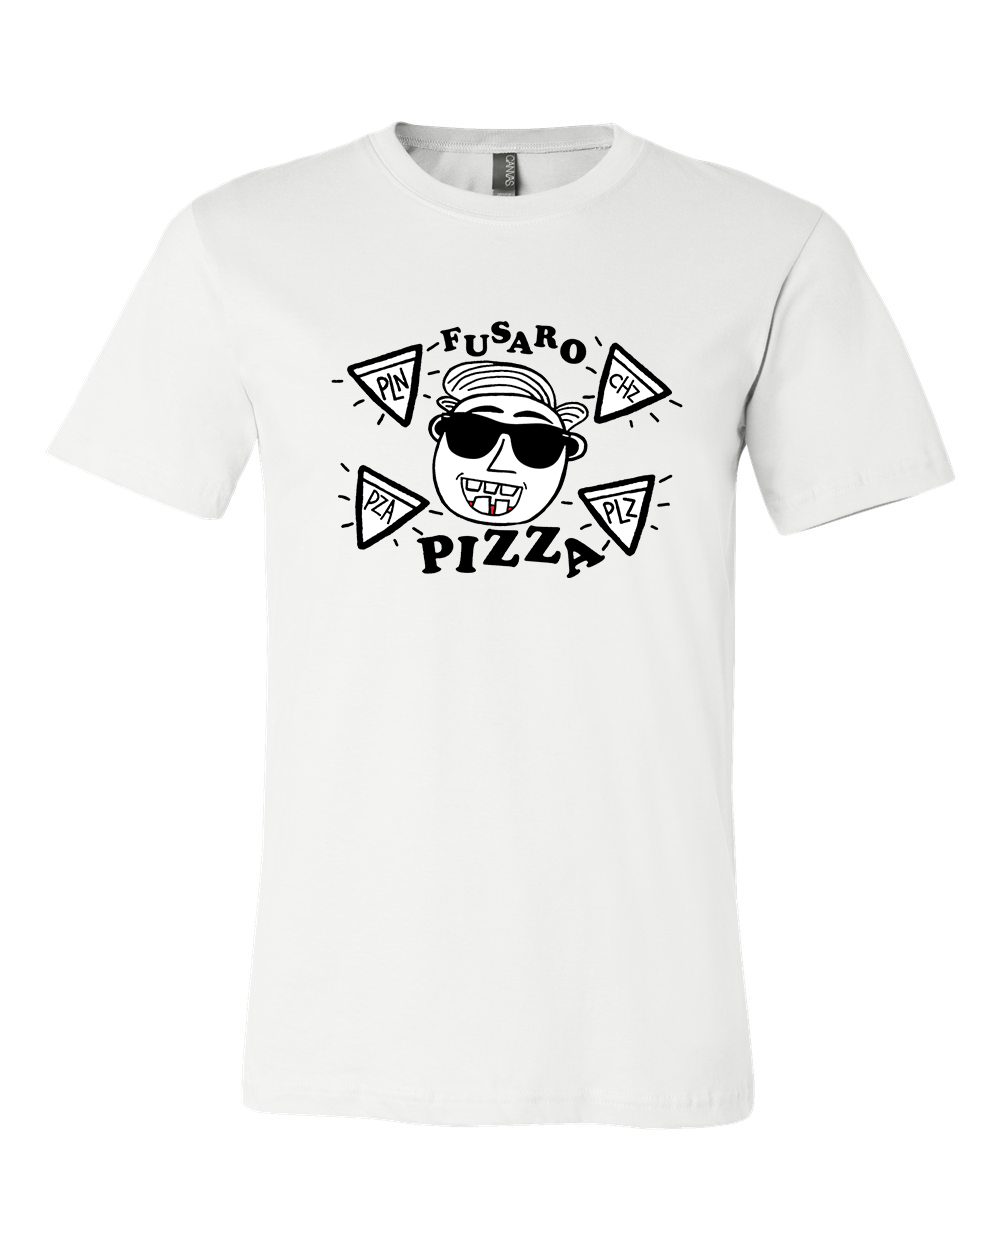 Fusaro Pizza : August 2021 Tee